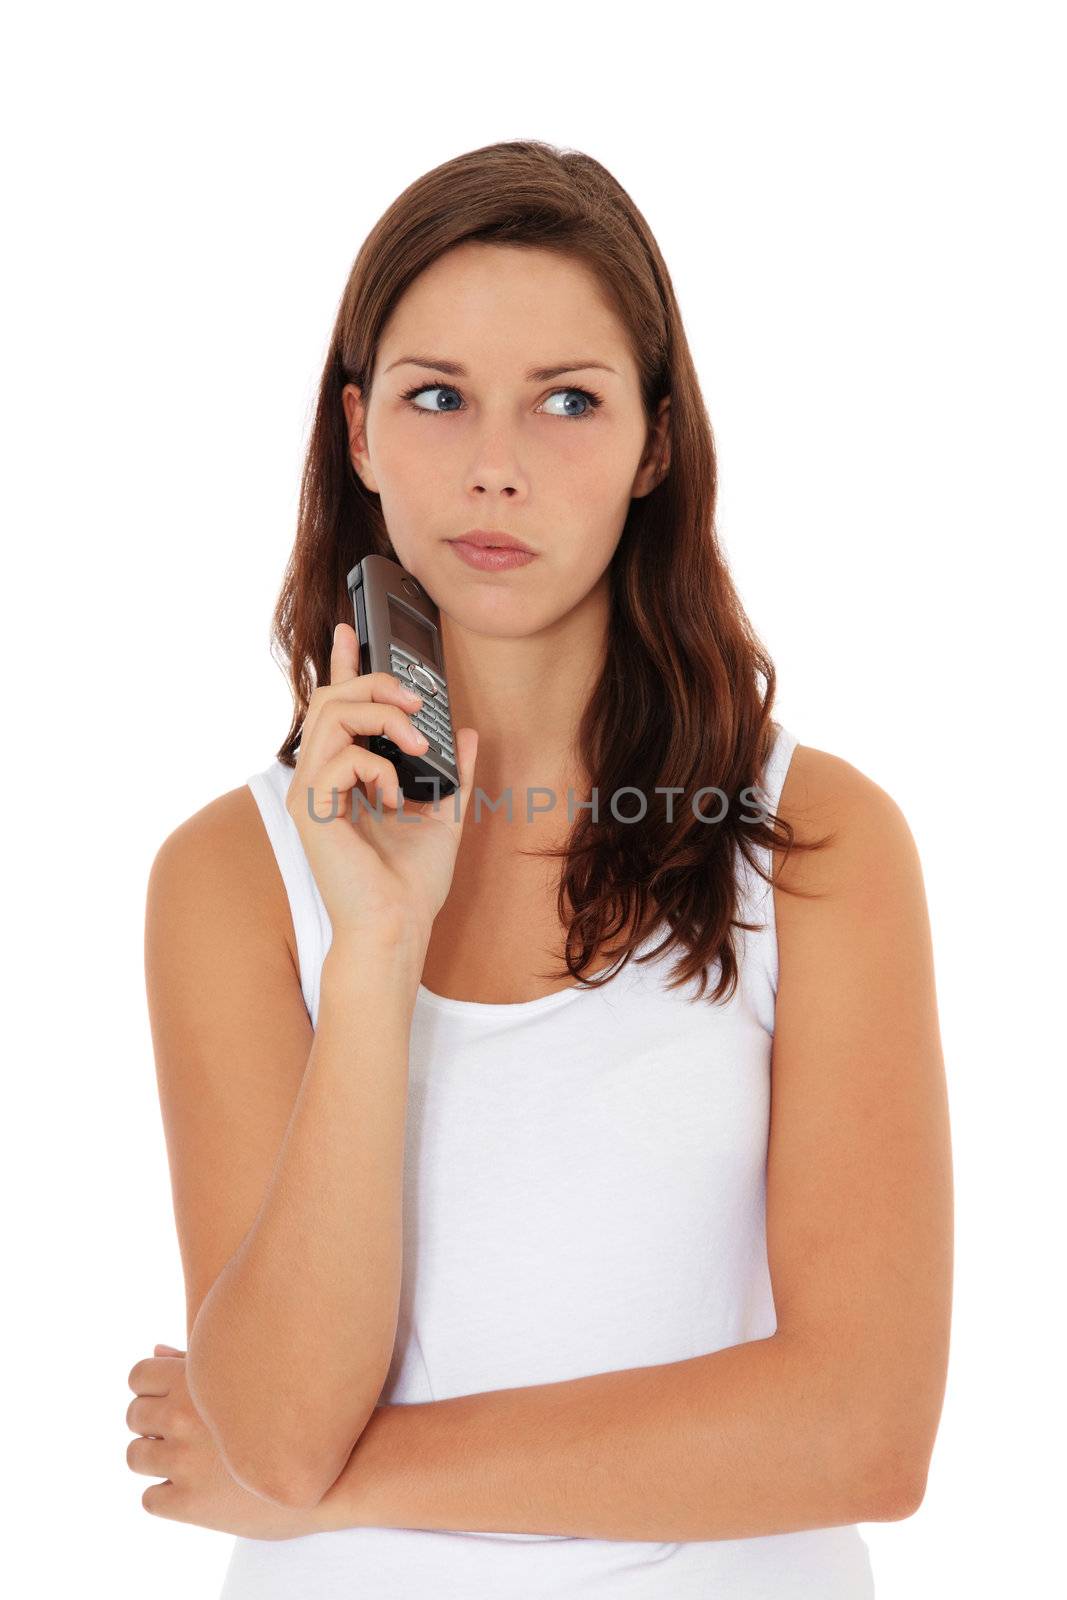 woman awaits a phone call by kaarsten